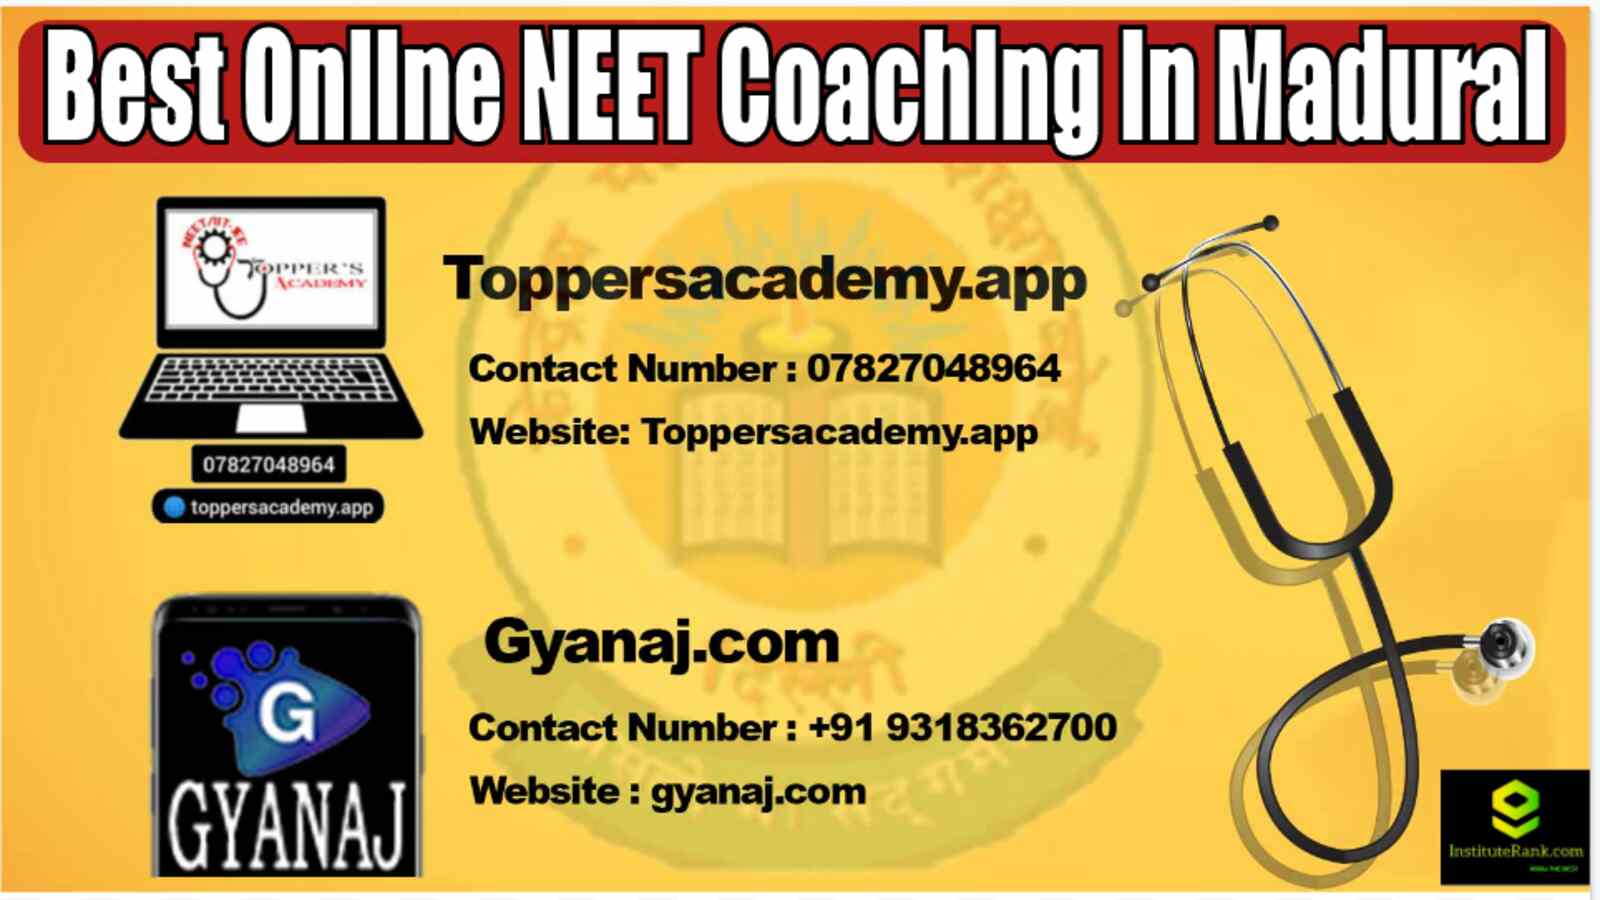 Best Online NEET Coaching in Madurai 2022